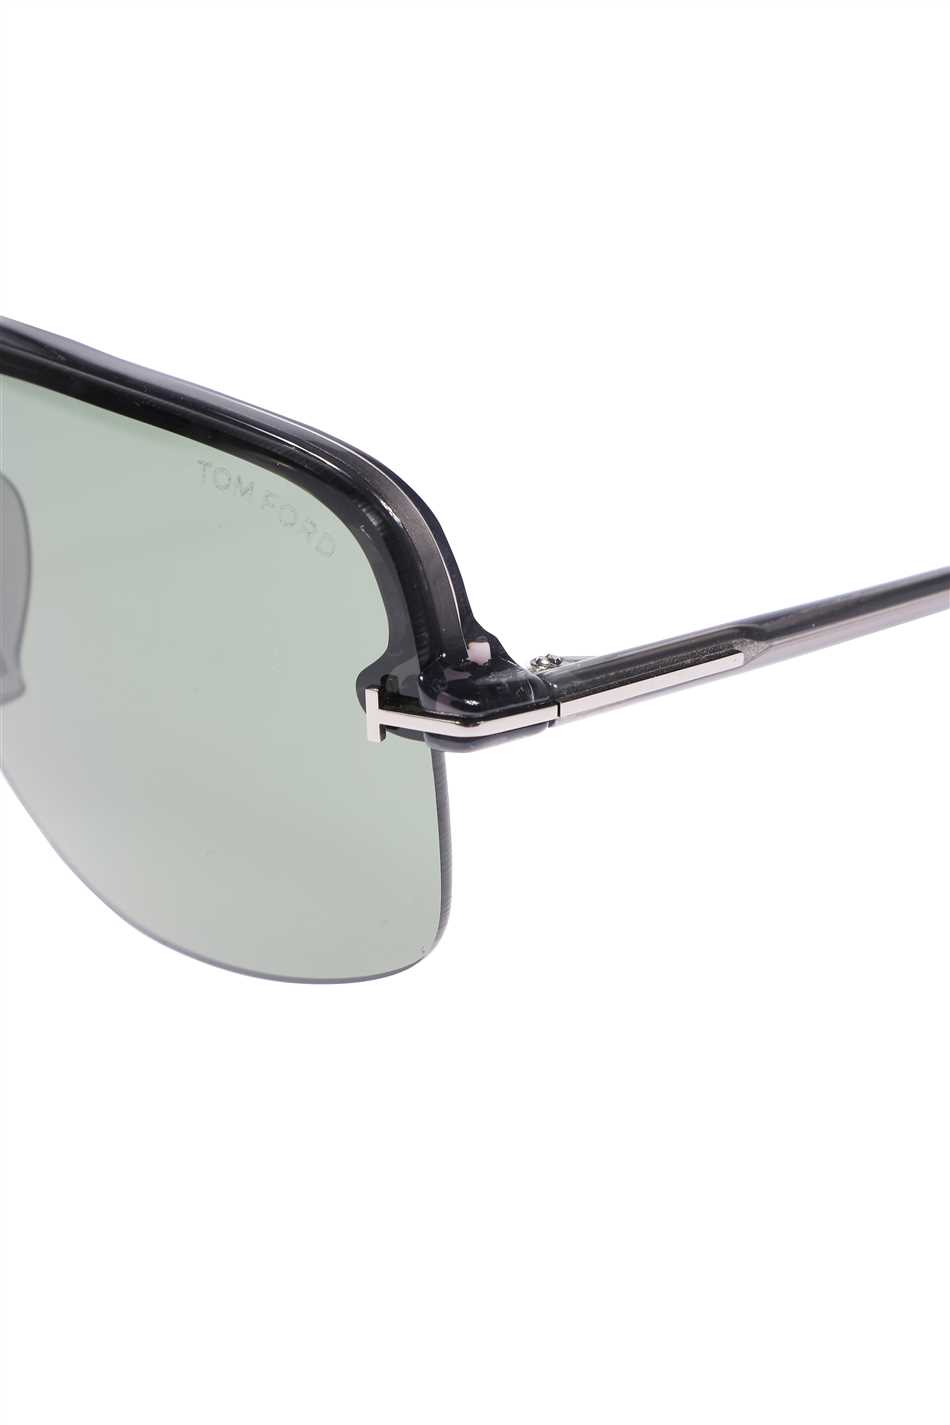 Tom Ford FT1003 Sunglasses 3